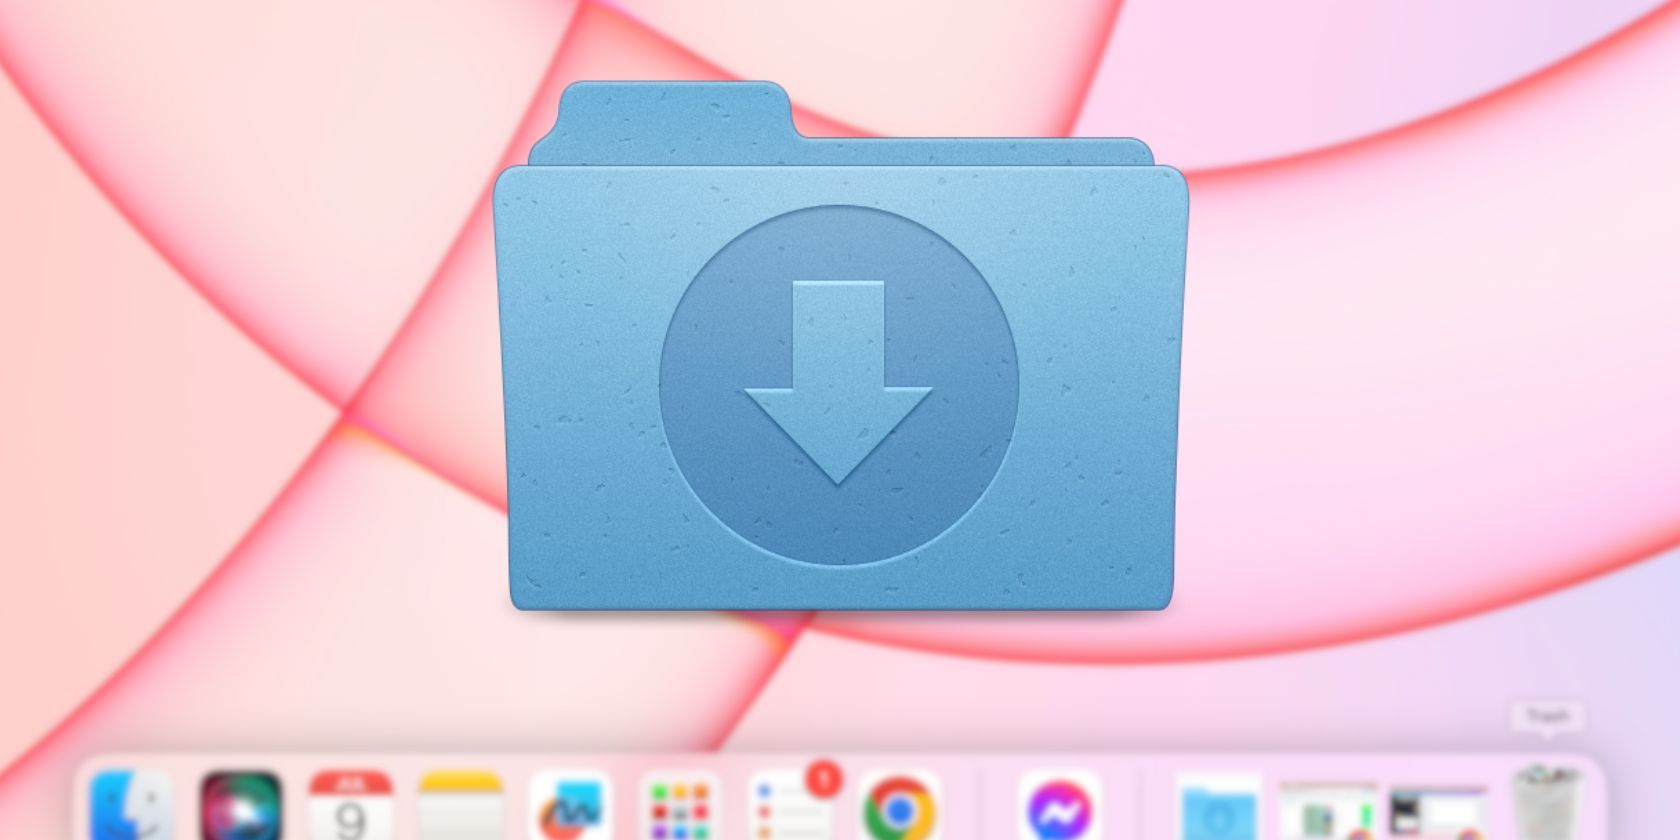 mac download folder missing from dock